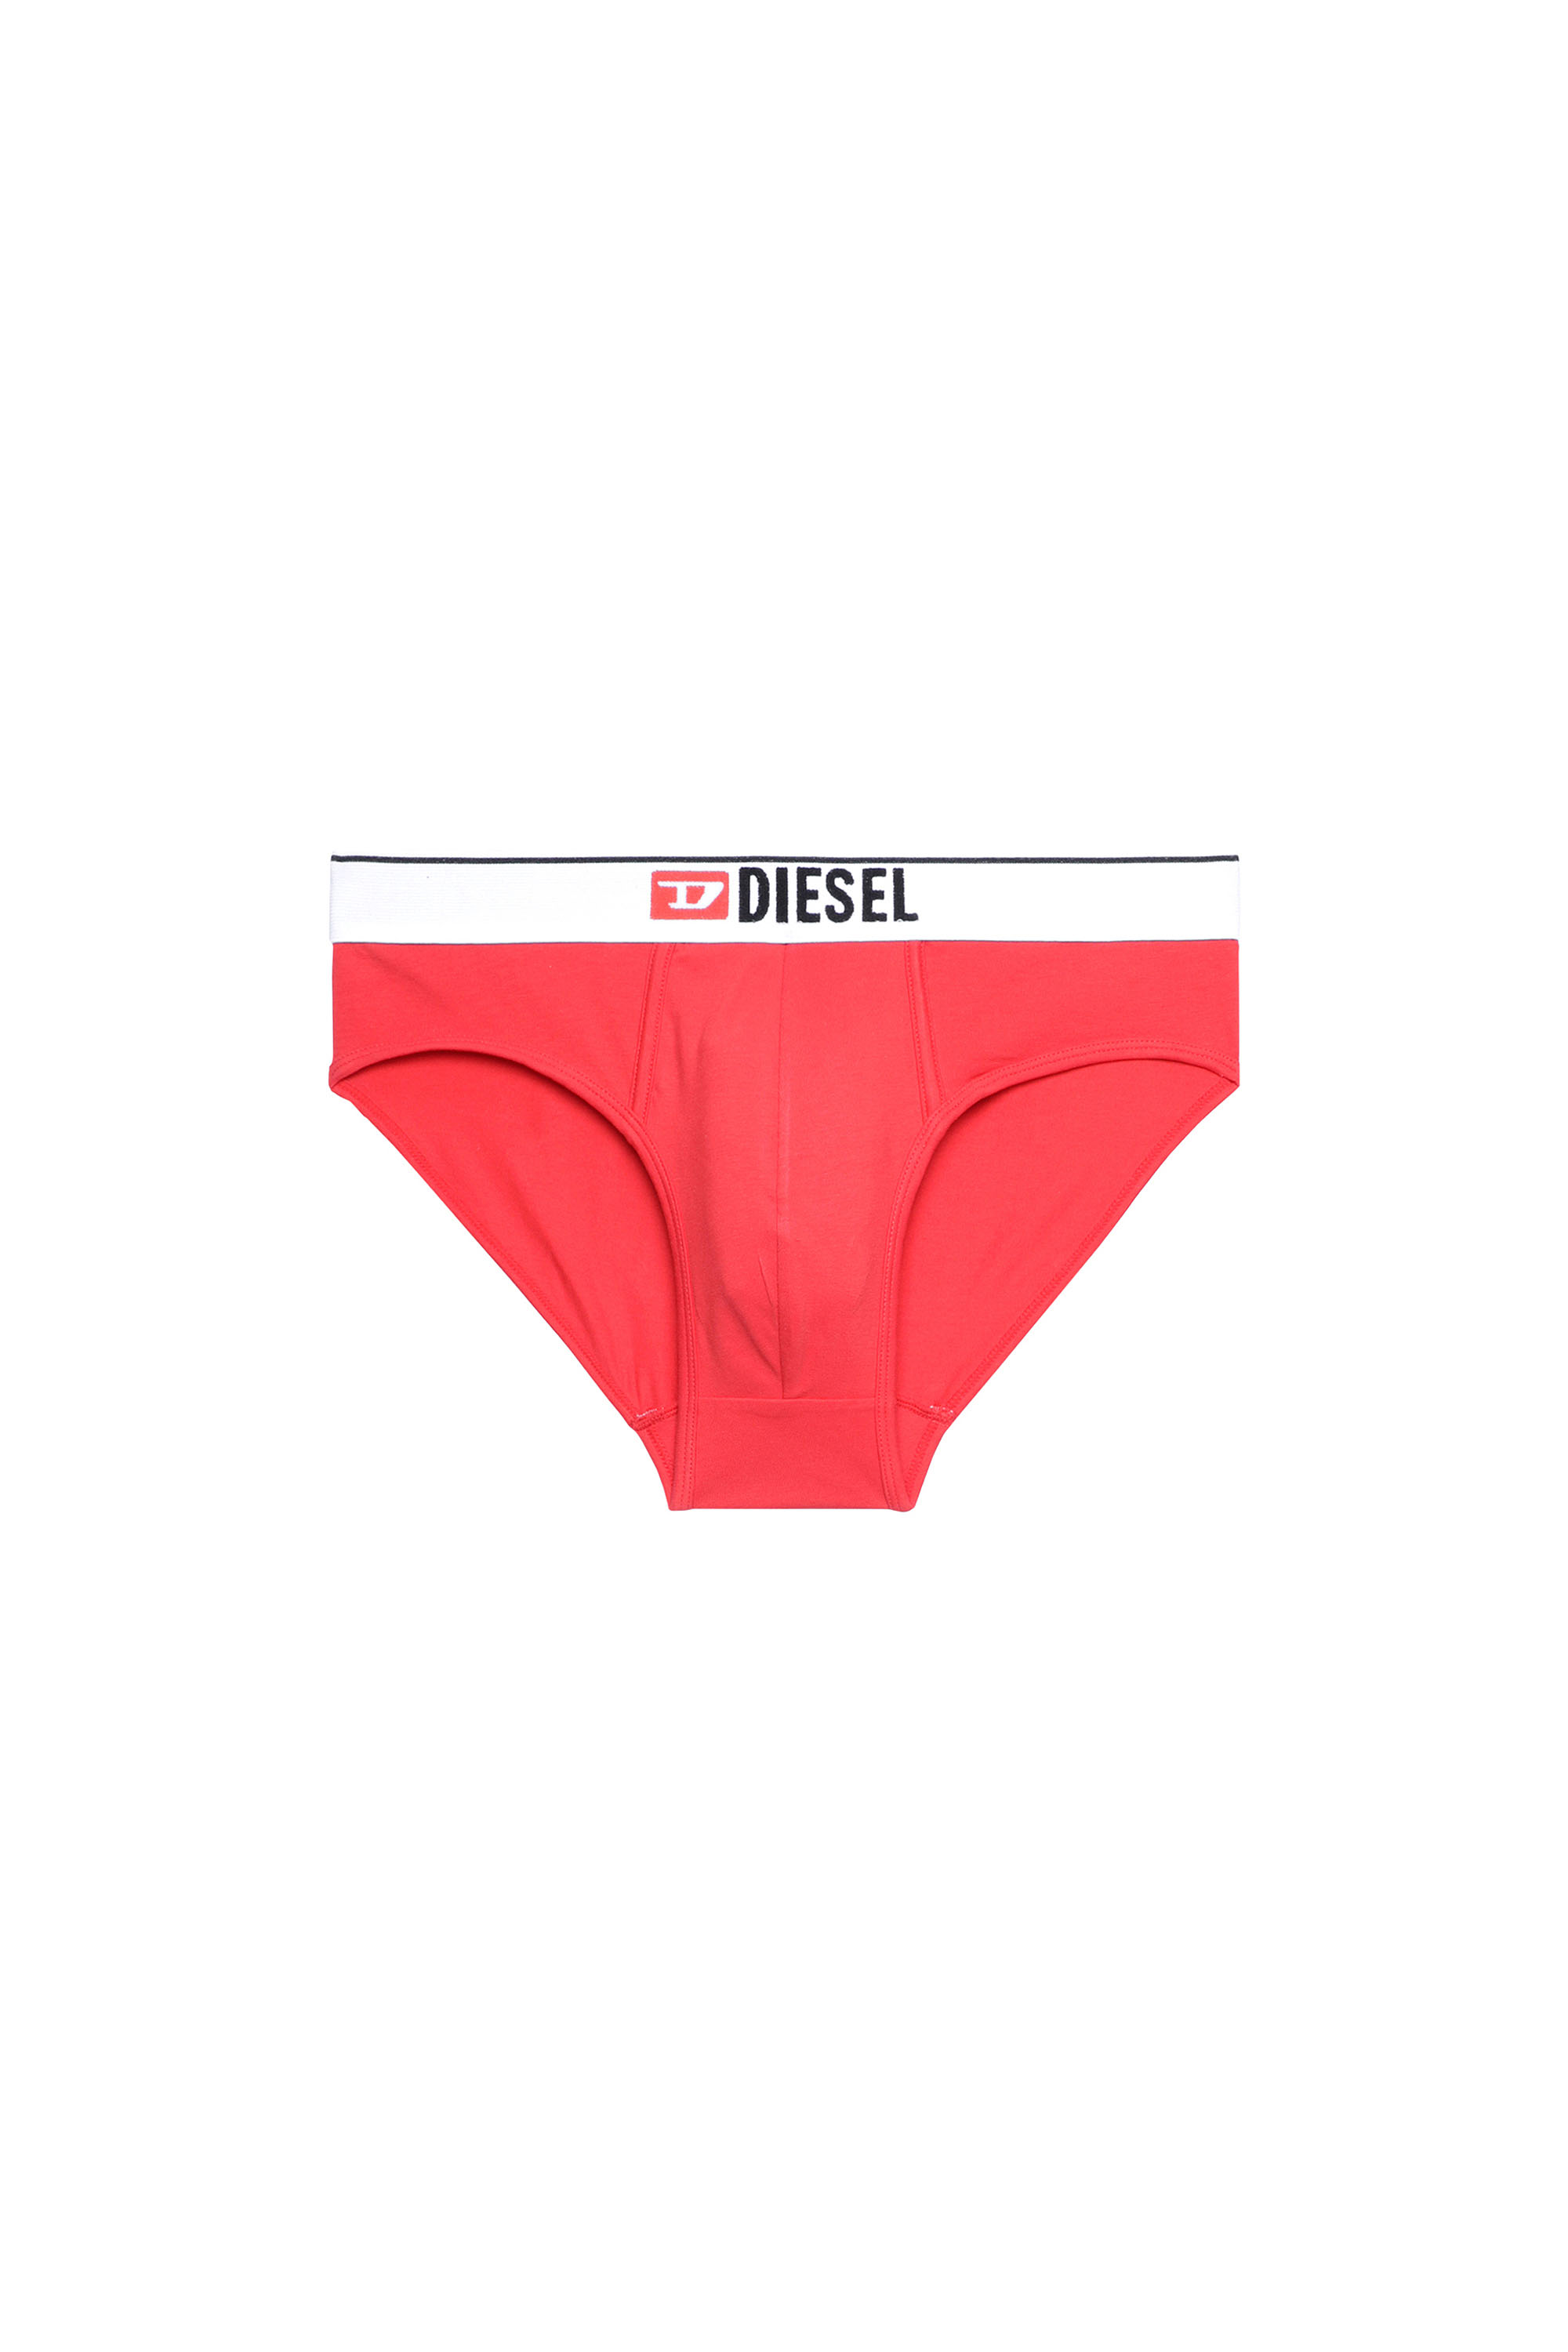 Diesel - UMBR-ANDRE, Rojo - Image 1